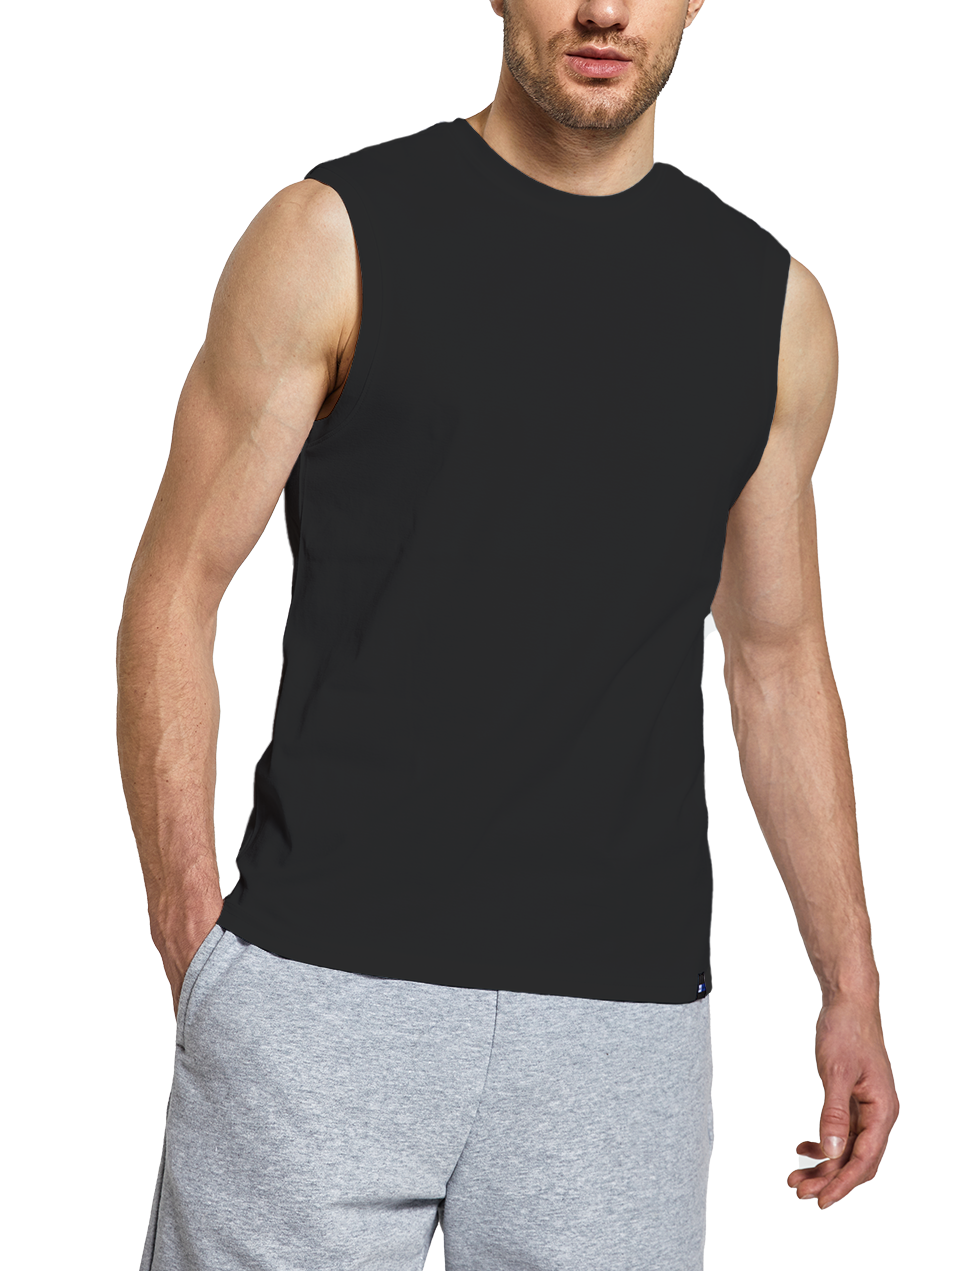 Men's Sleeveless Muscle Shirts (Regular & Big Men)